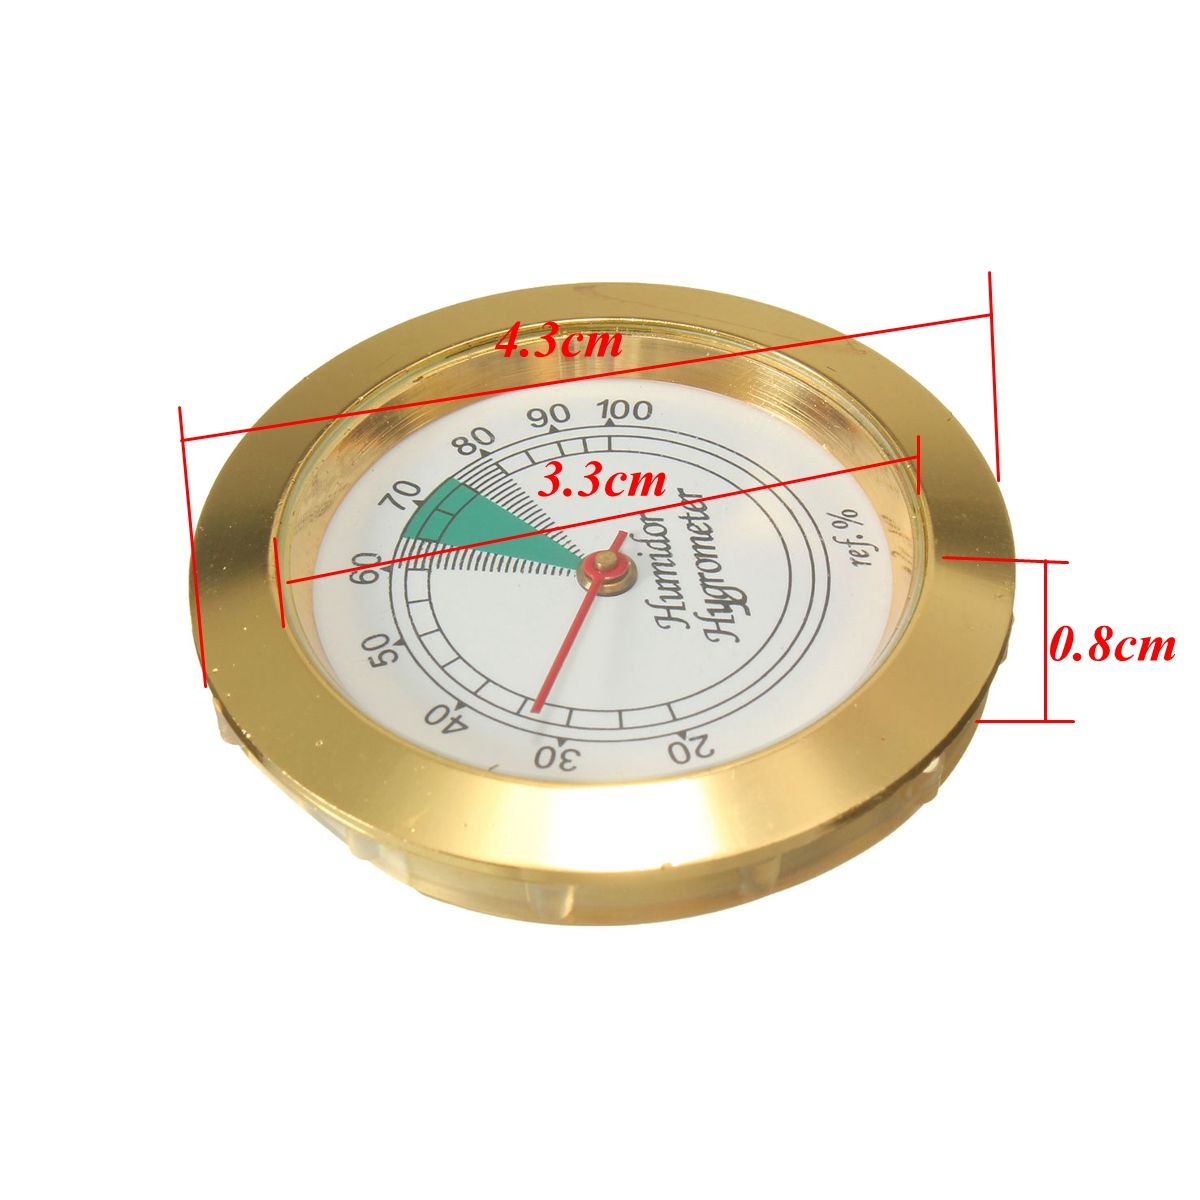 43mm-Diameter-Precision-Analog-Hygrometer-Moisture-Meter-For-Tobacco-Cigar-Humidor-992855